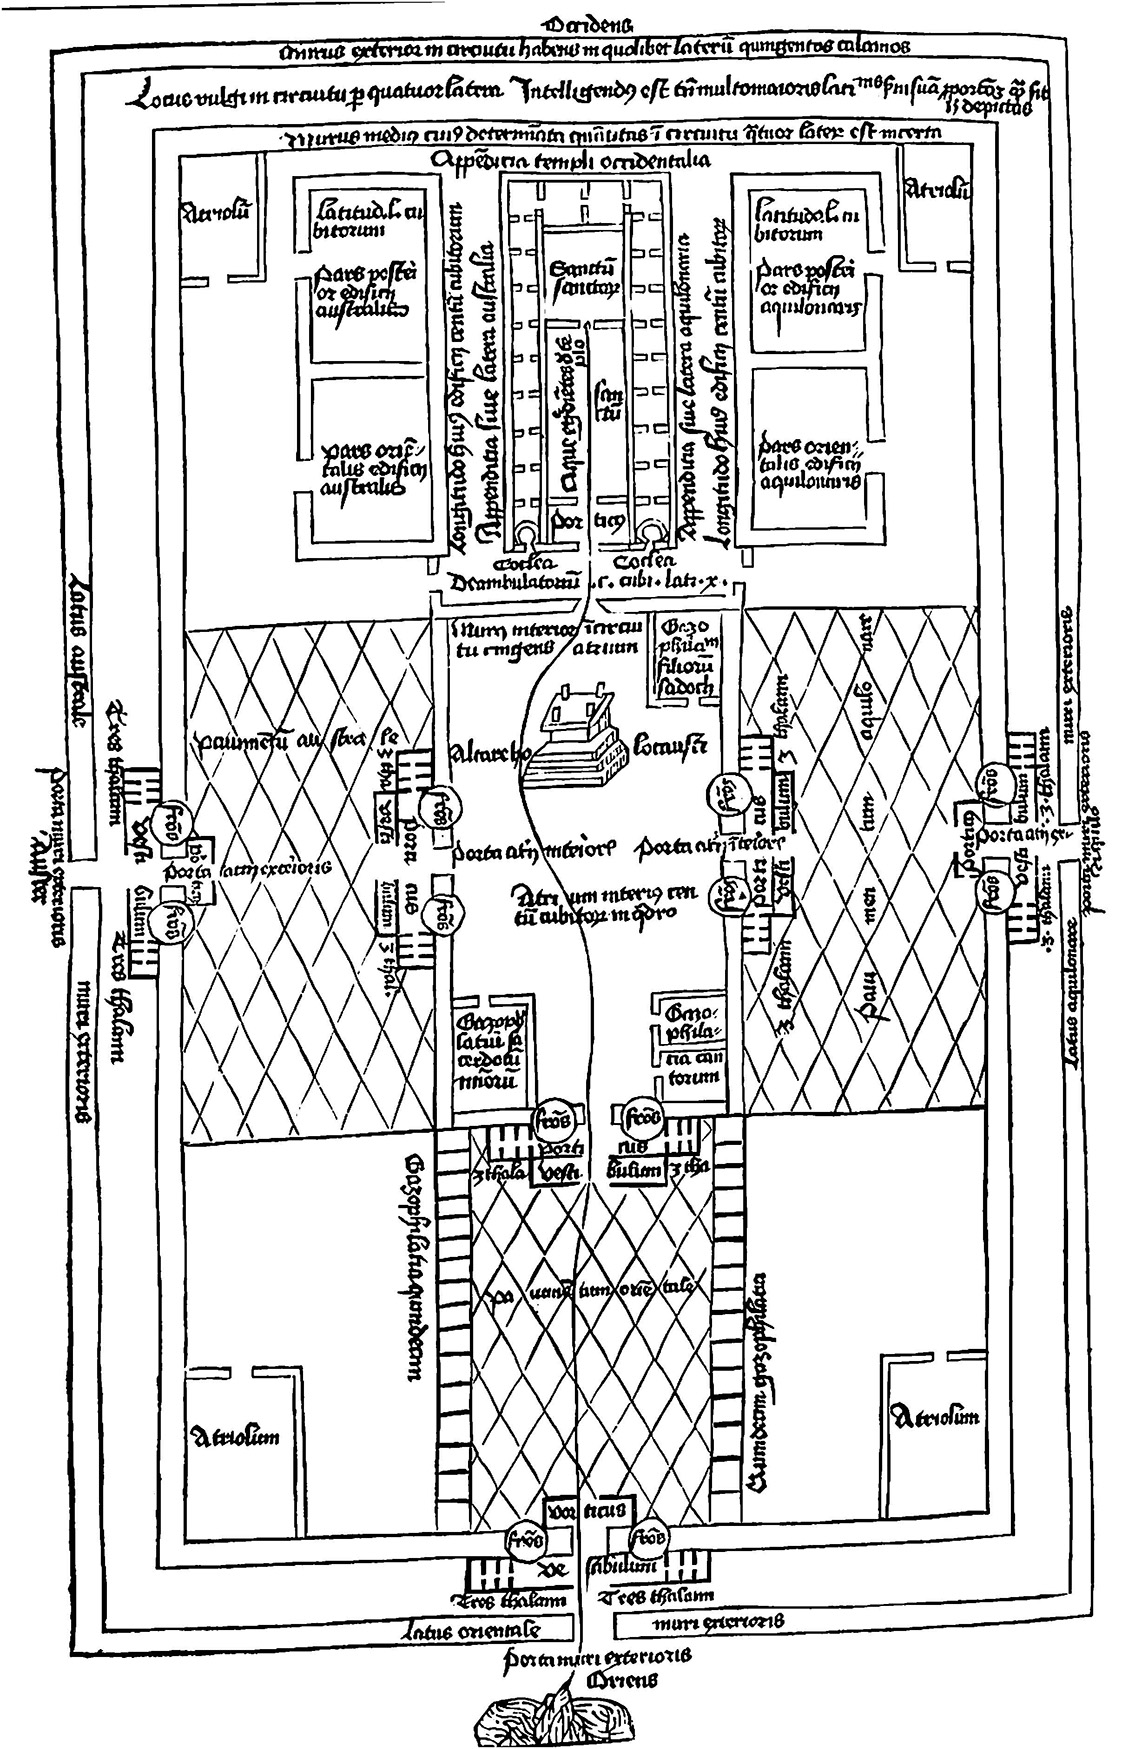 Plan of The Temple in Jerusaem